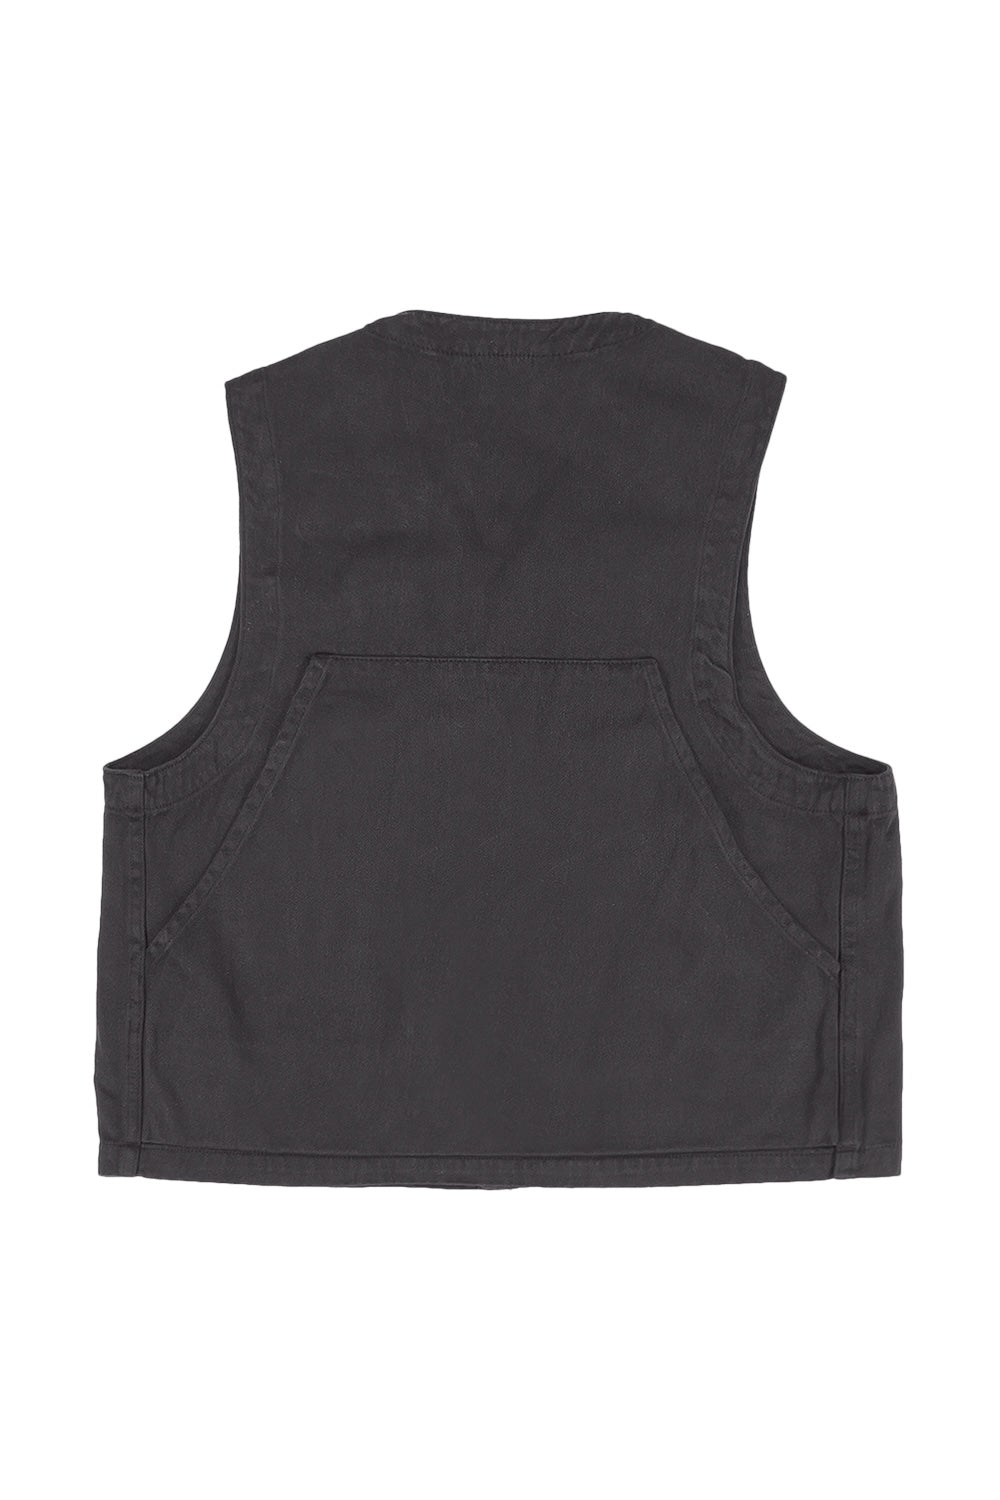 Falcon Vest | Jungmaven Hemp Clothing & Accessories / model_desc: Back in Black